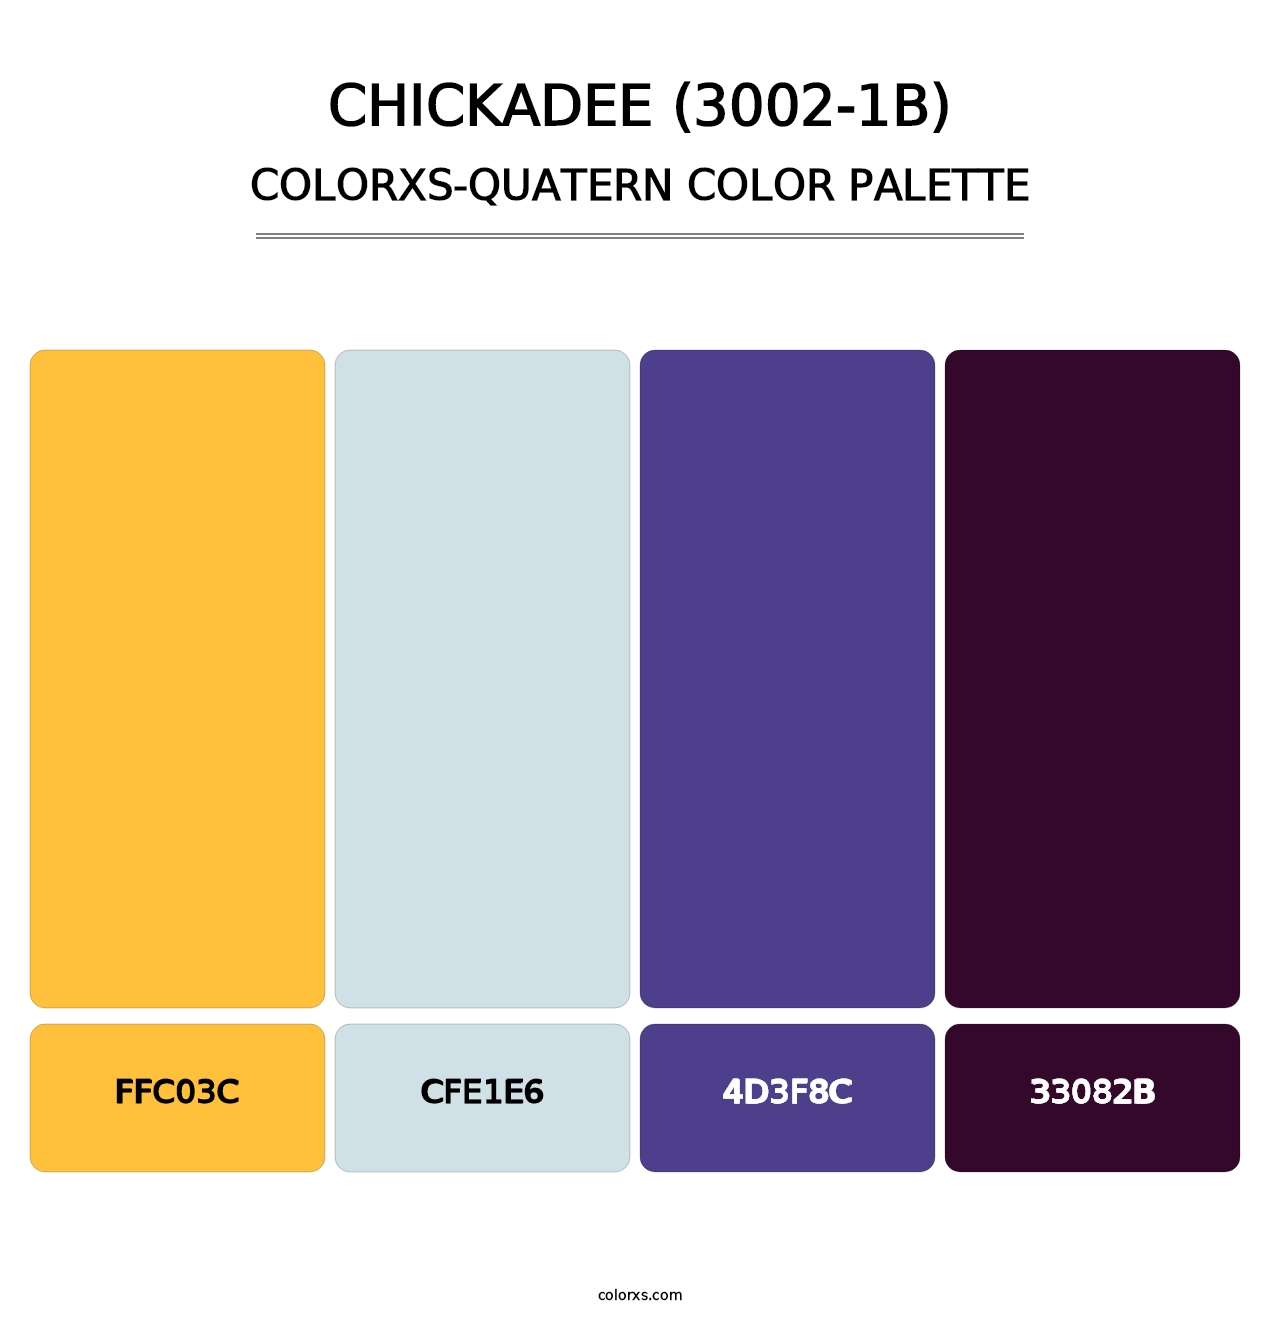 Chickadee (3002-1B) - Colorxs Quatern Palette